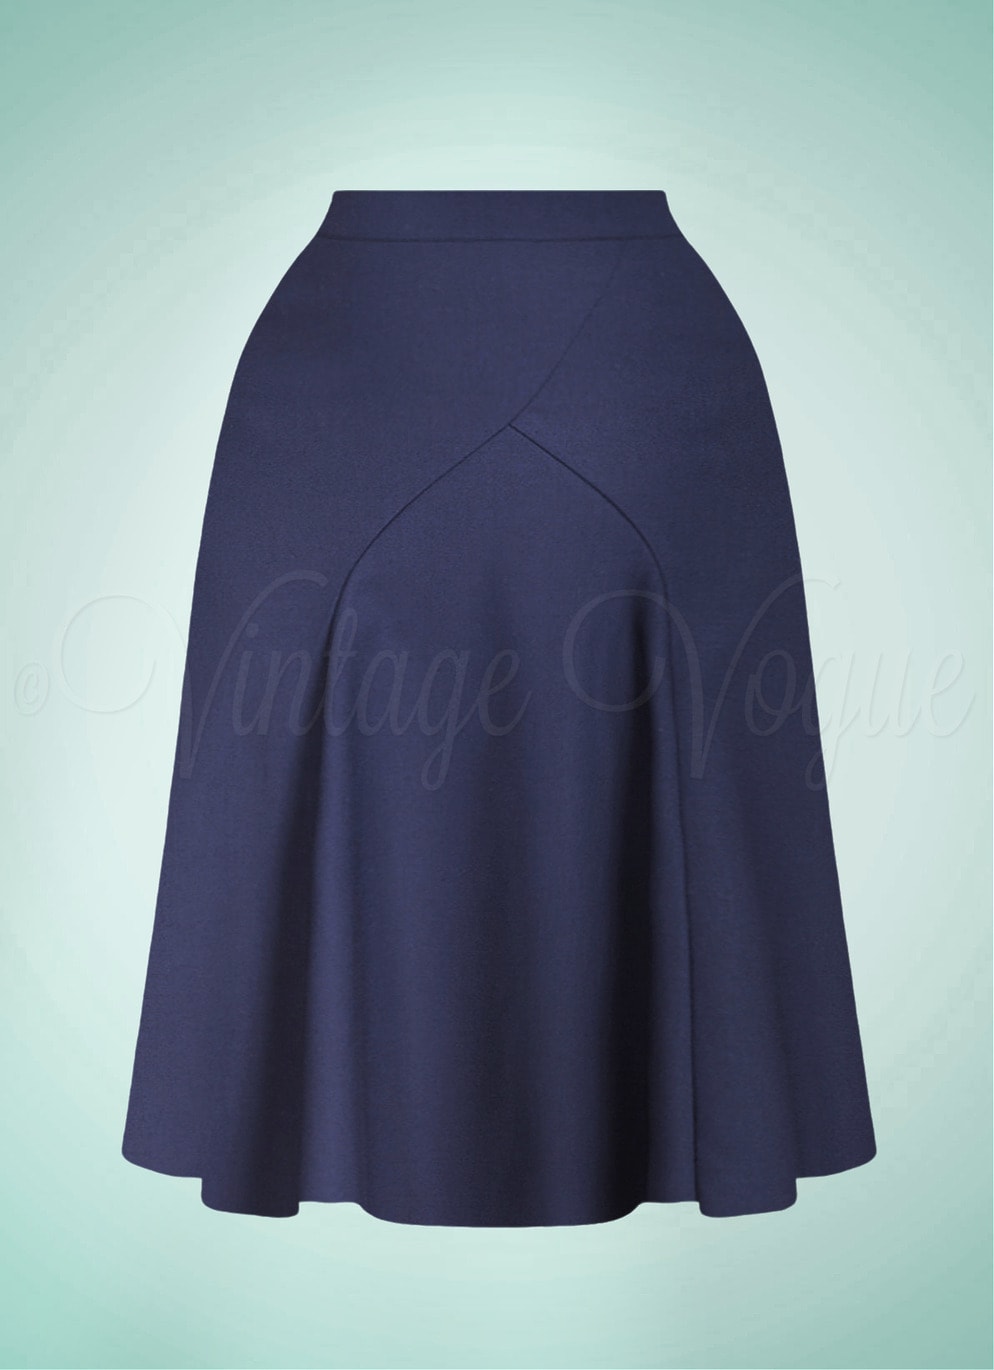 Banned Retro Vintage Basic A-Linie Swing Rock Carol Panel Skirt in Navy Blau Dunkelblau SK25514